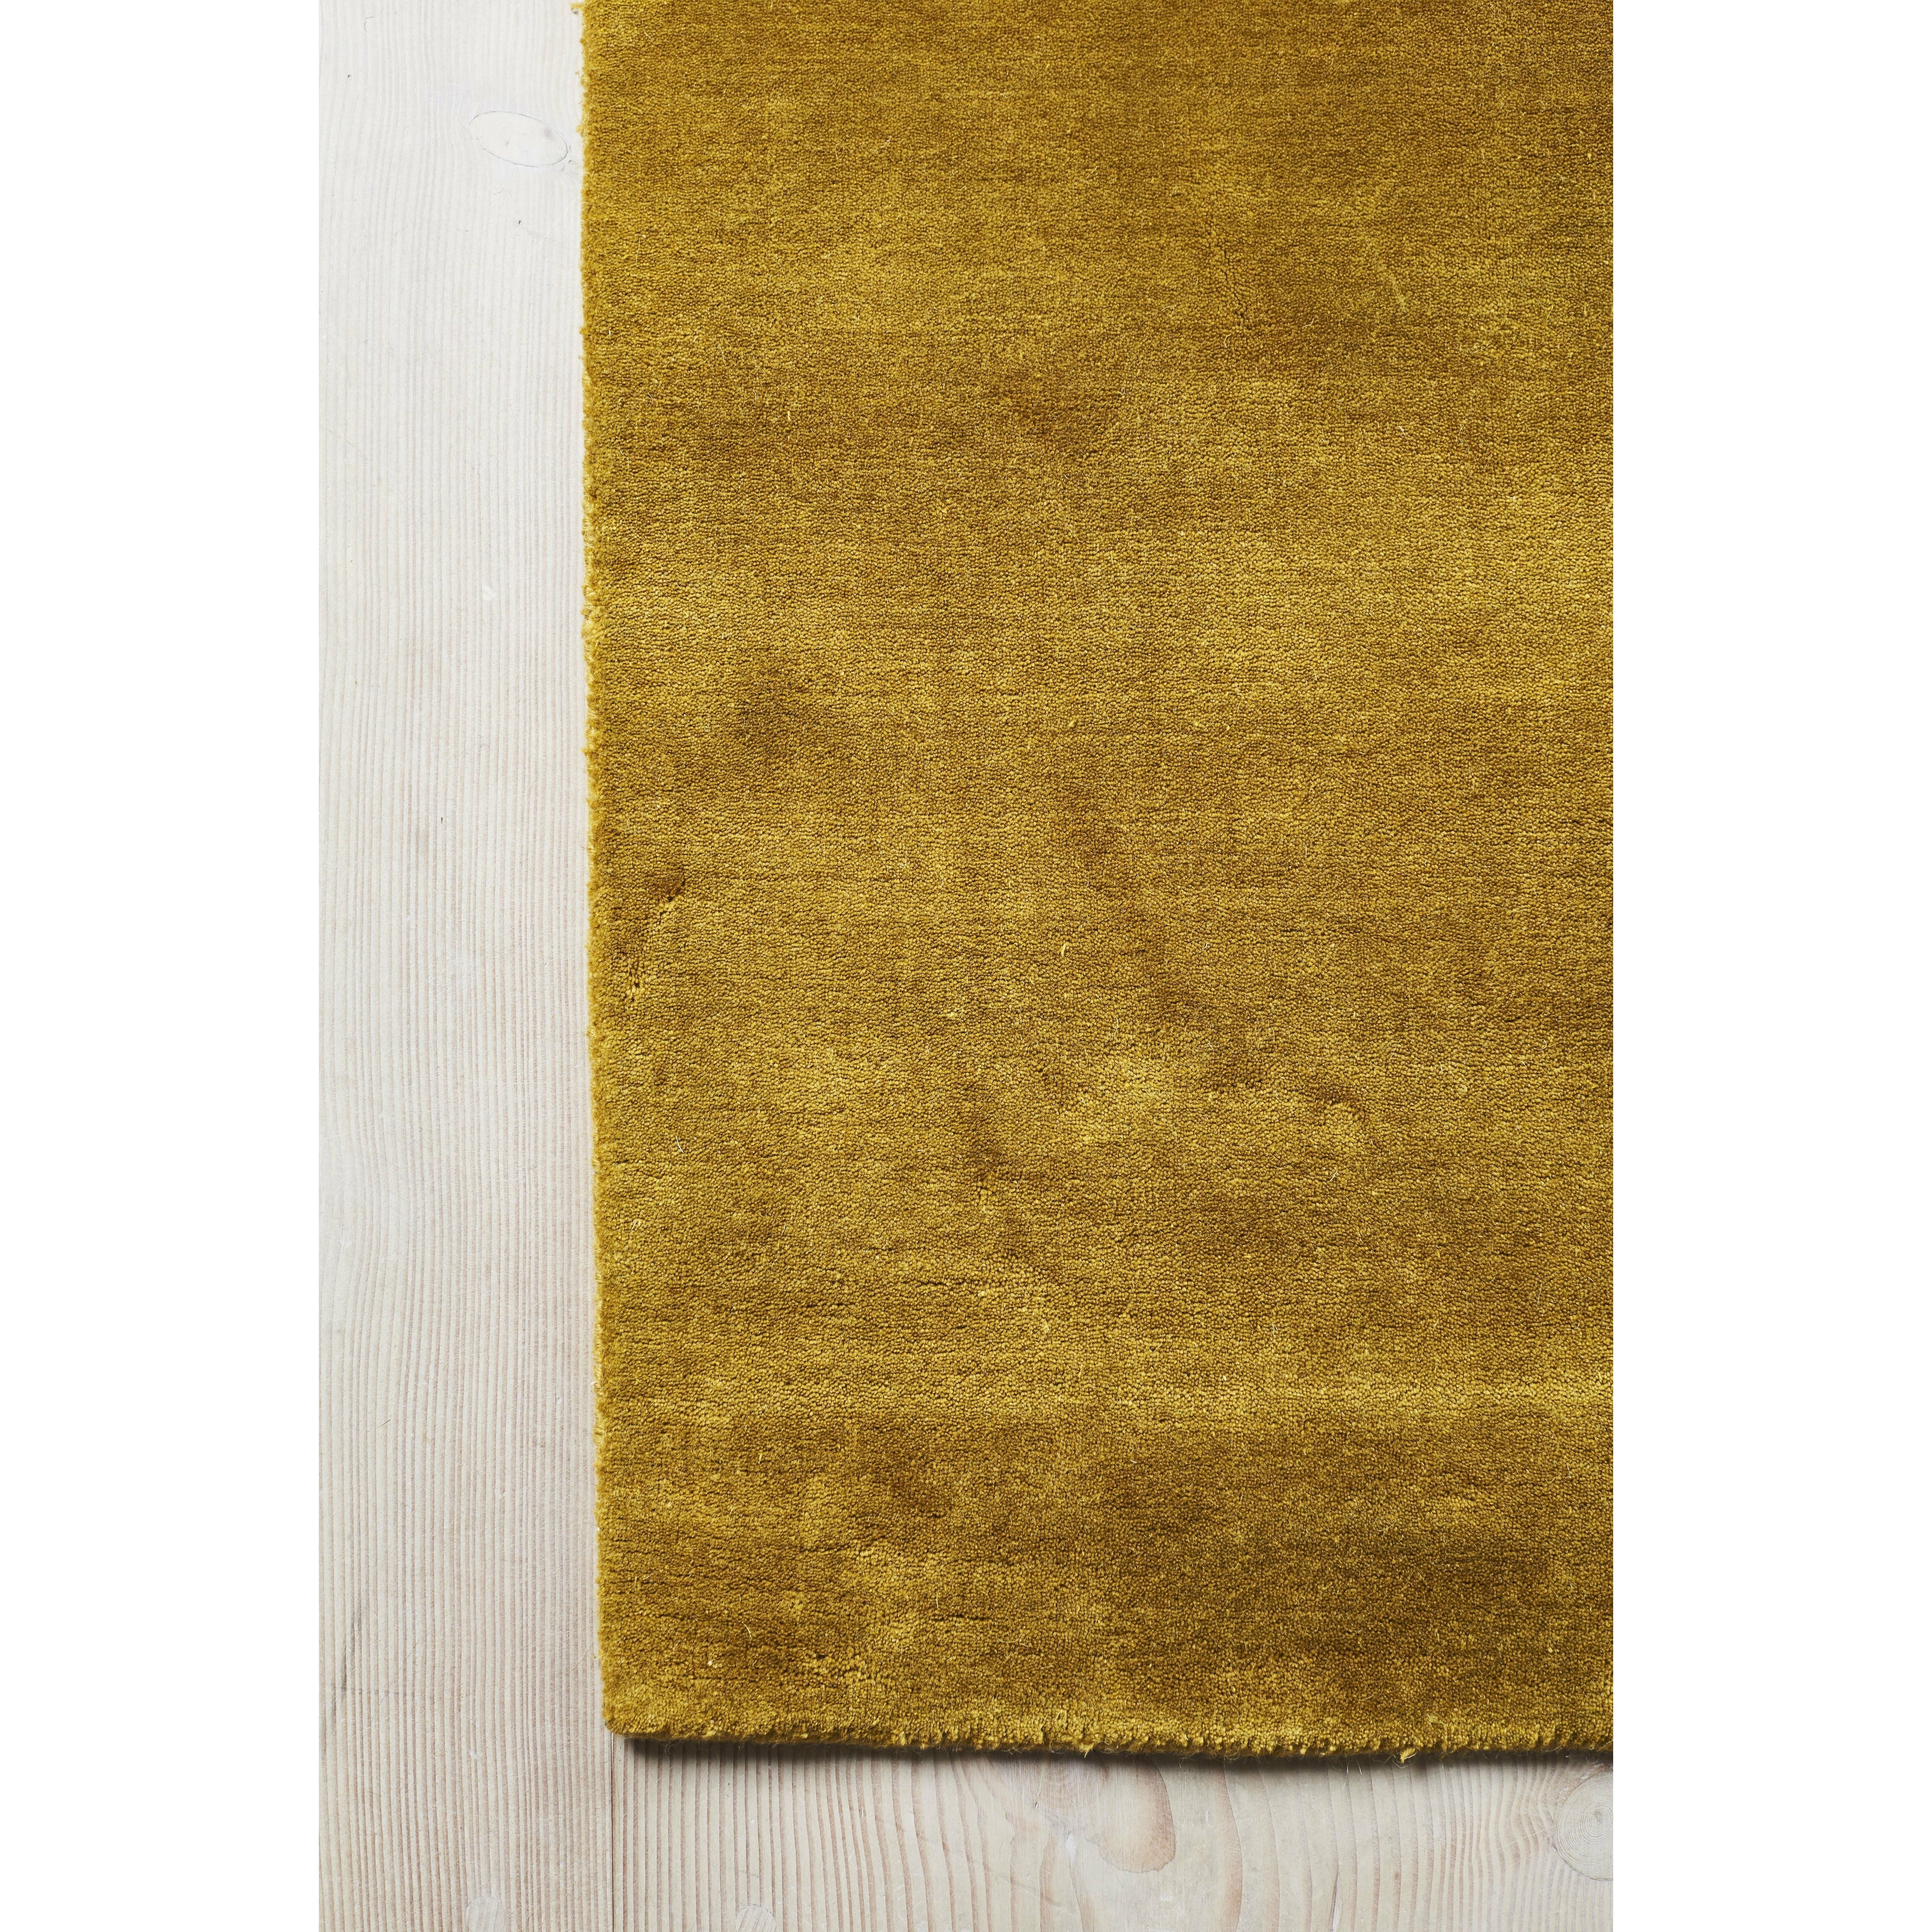 Massimo Earth bambus koberec čínská žlutá, 170x240 cm